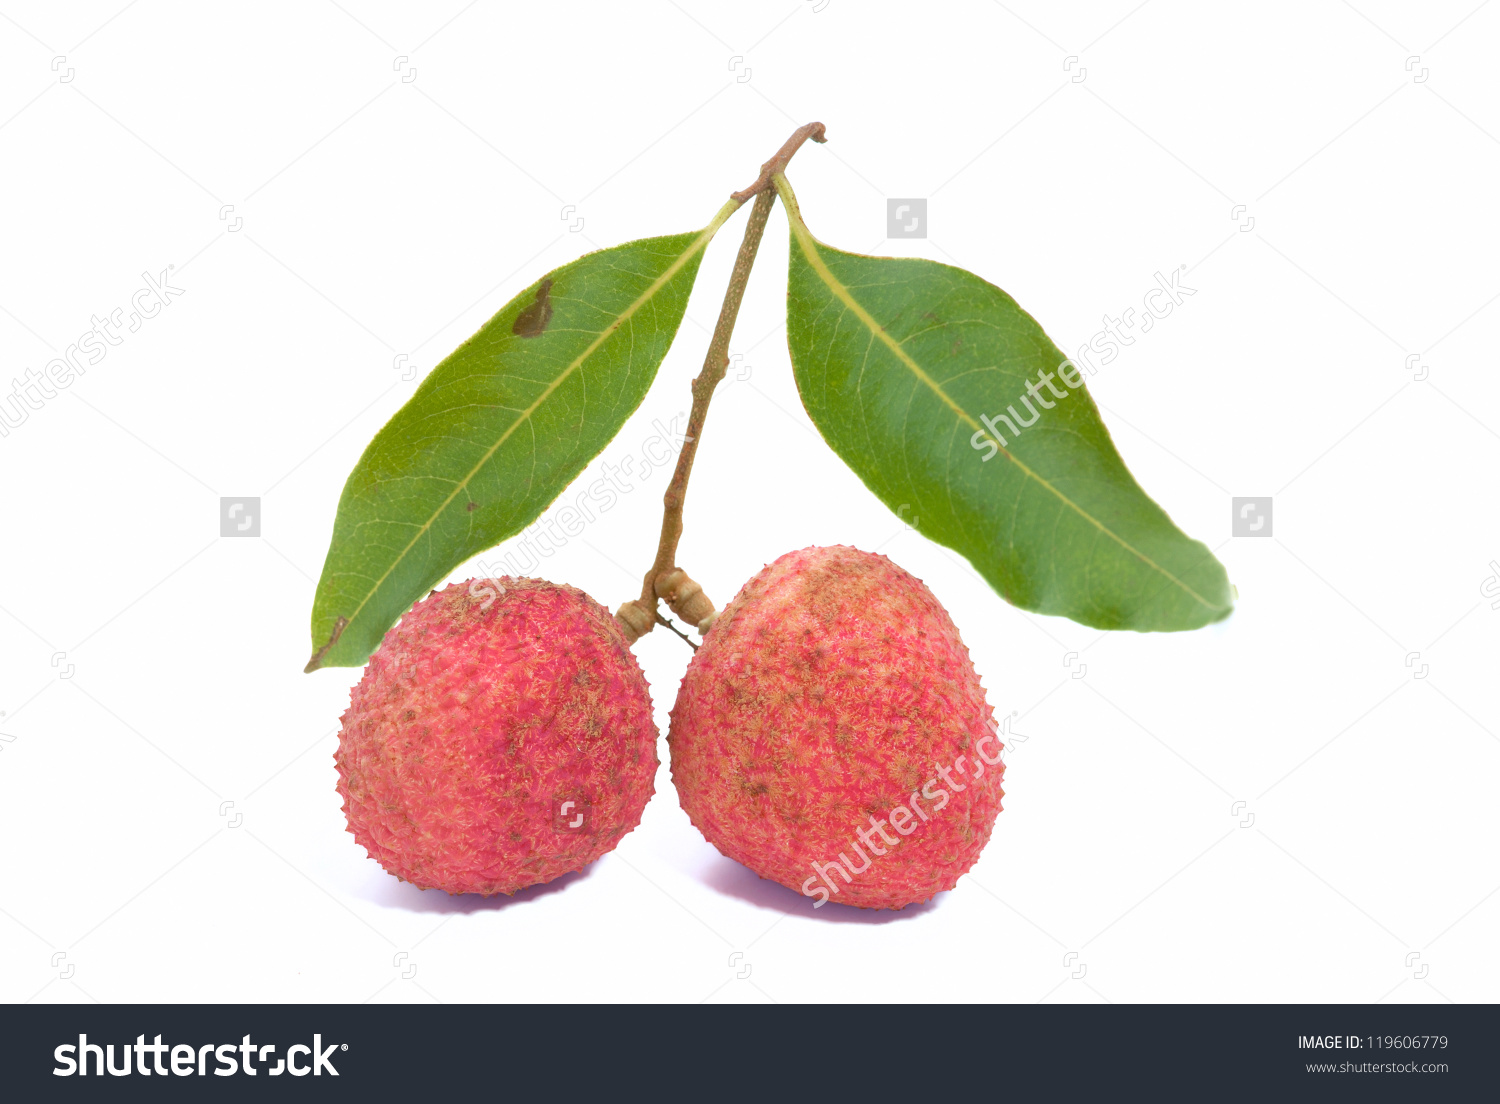 Fruit Name Litchi Chinensis Stock Photo 119606779.